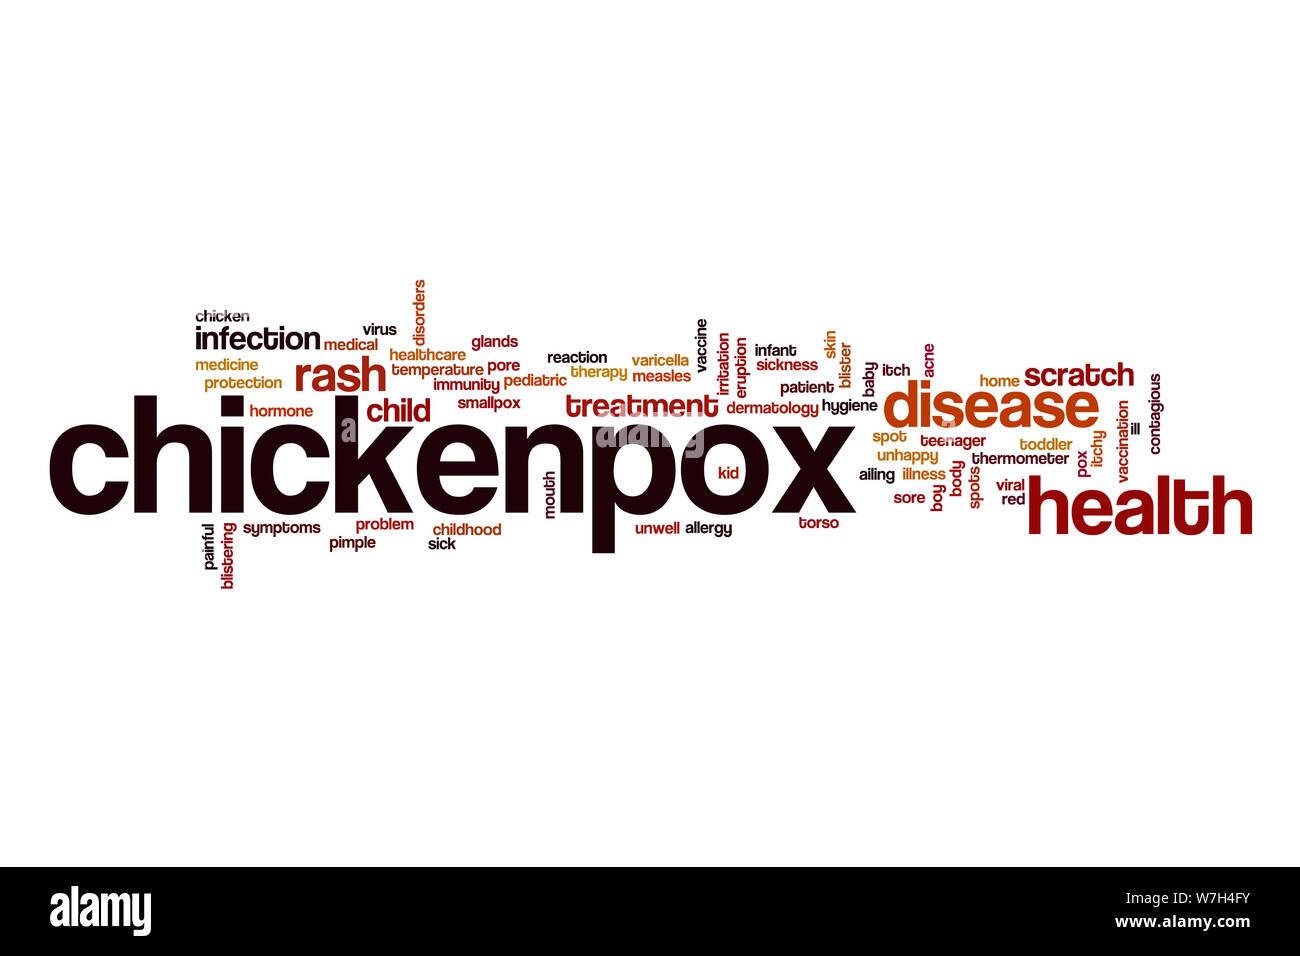 Chickenpox word cloud Stock Photo